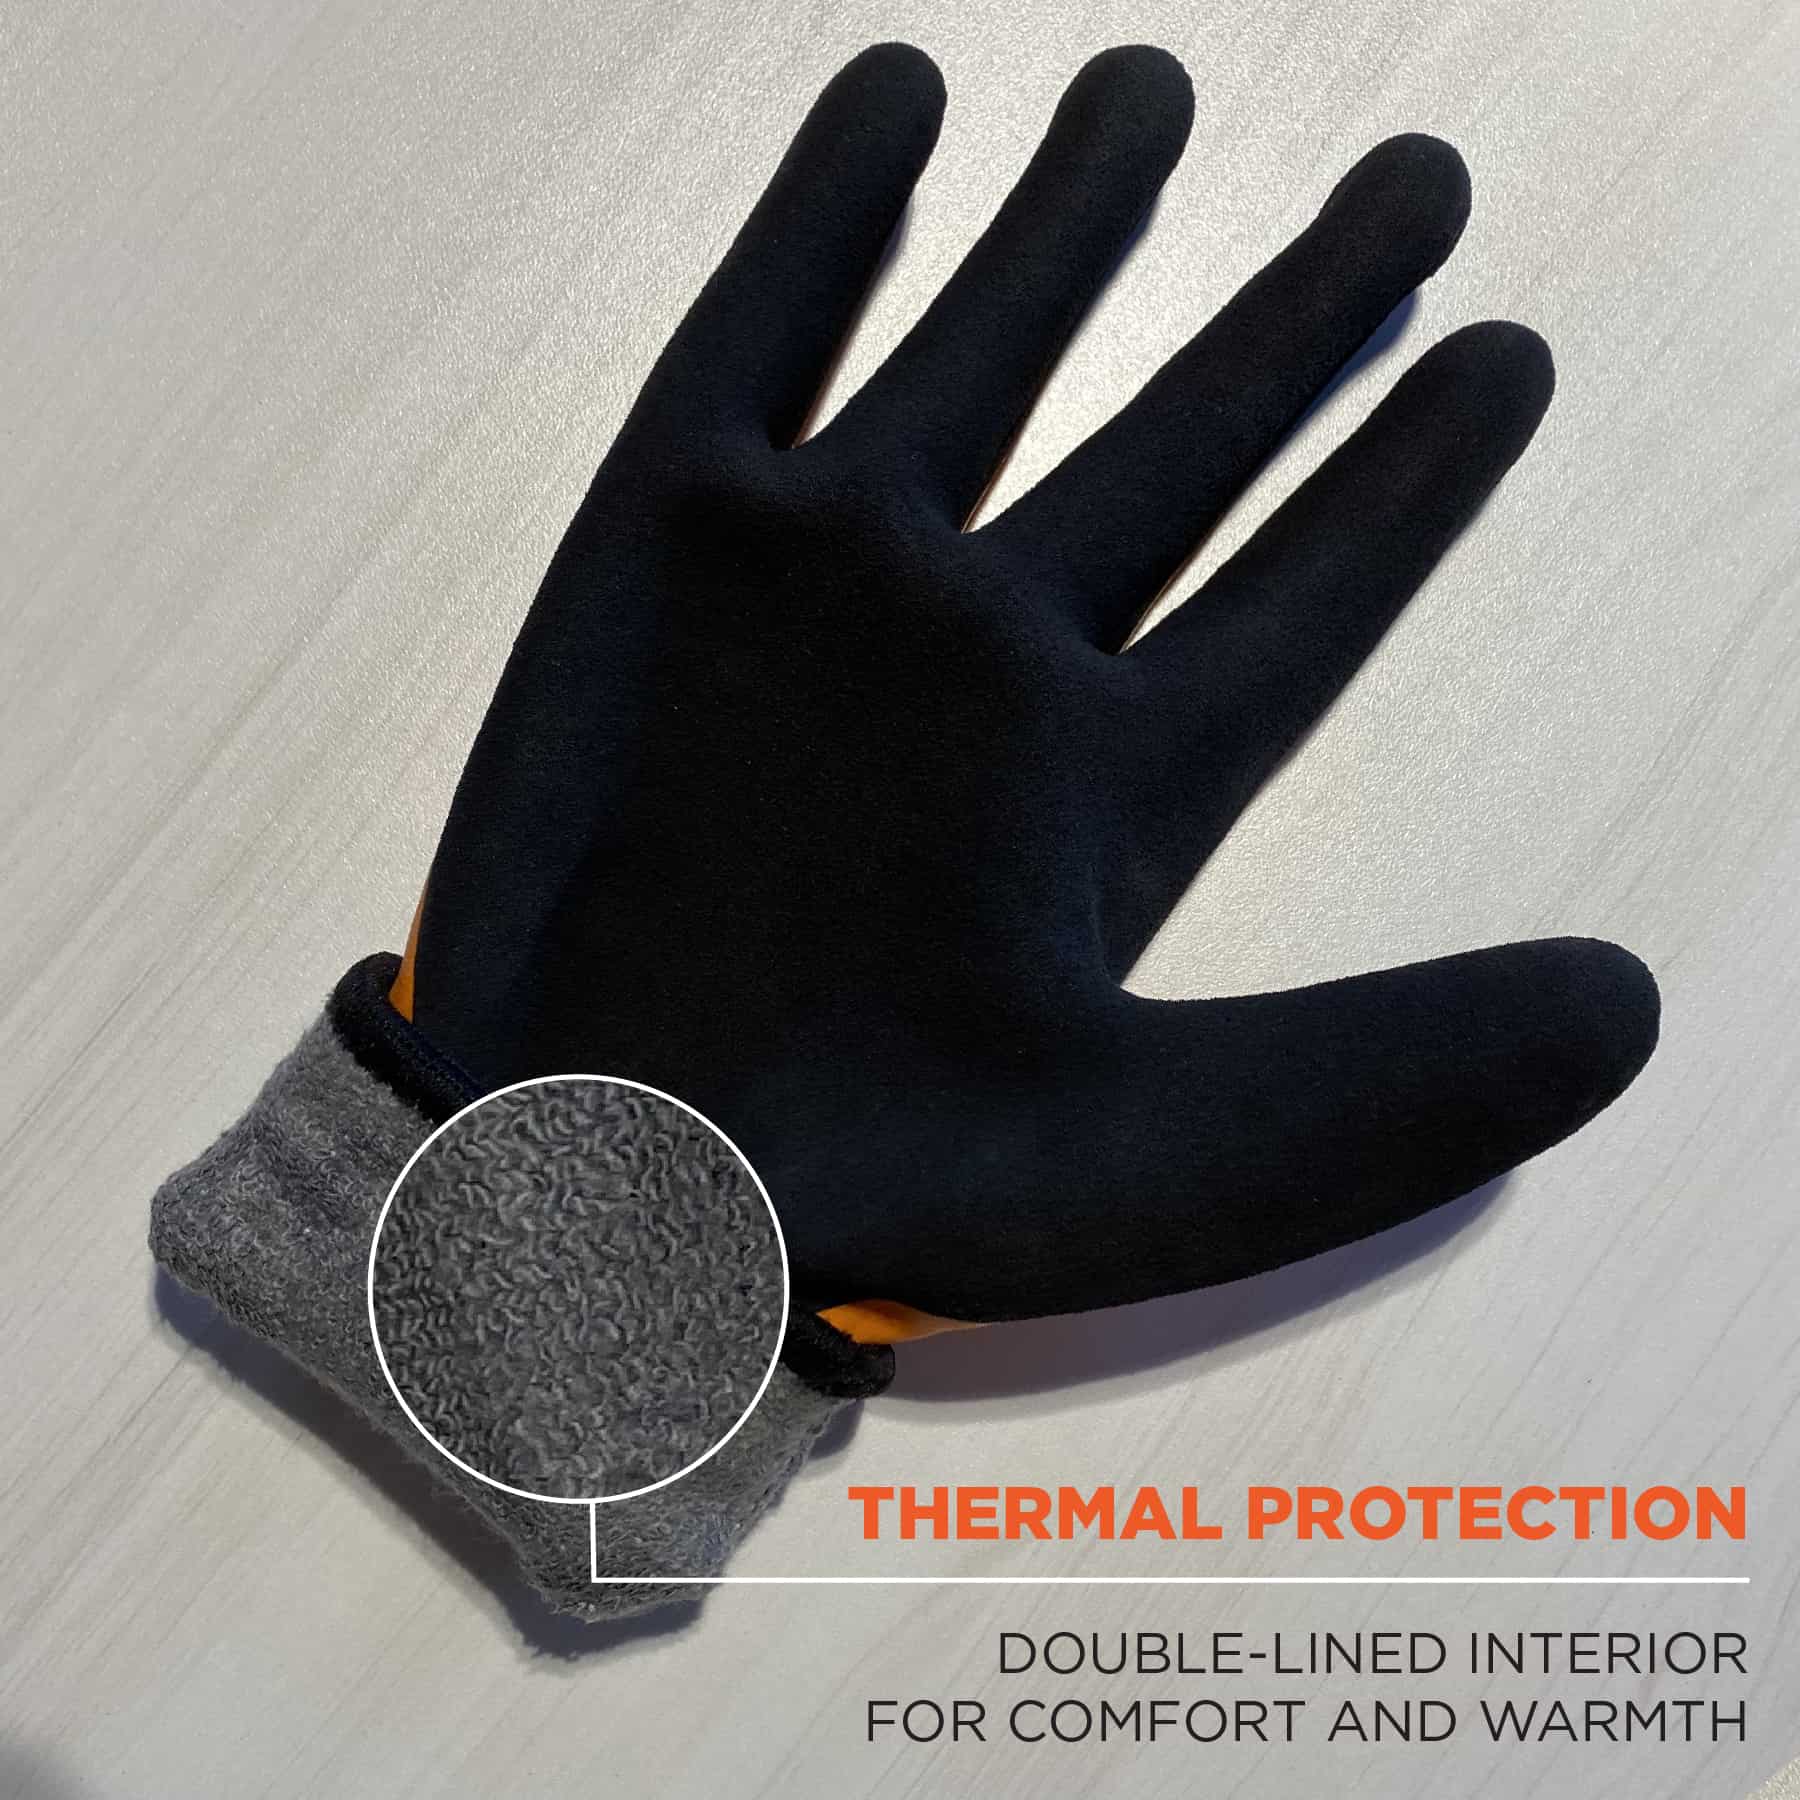 IS-022 Snow Leopard Ice A2 Cut Resistant Winter Work Glove - Medium